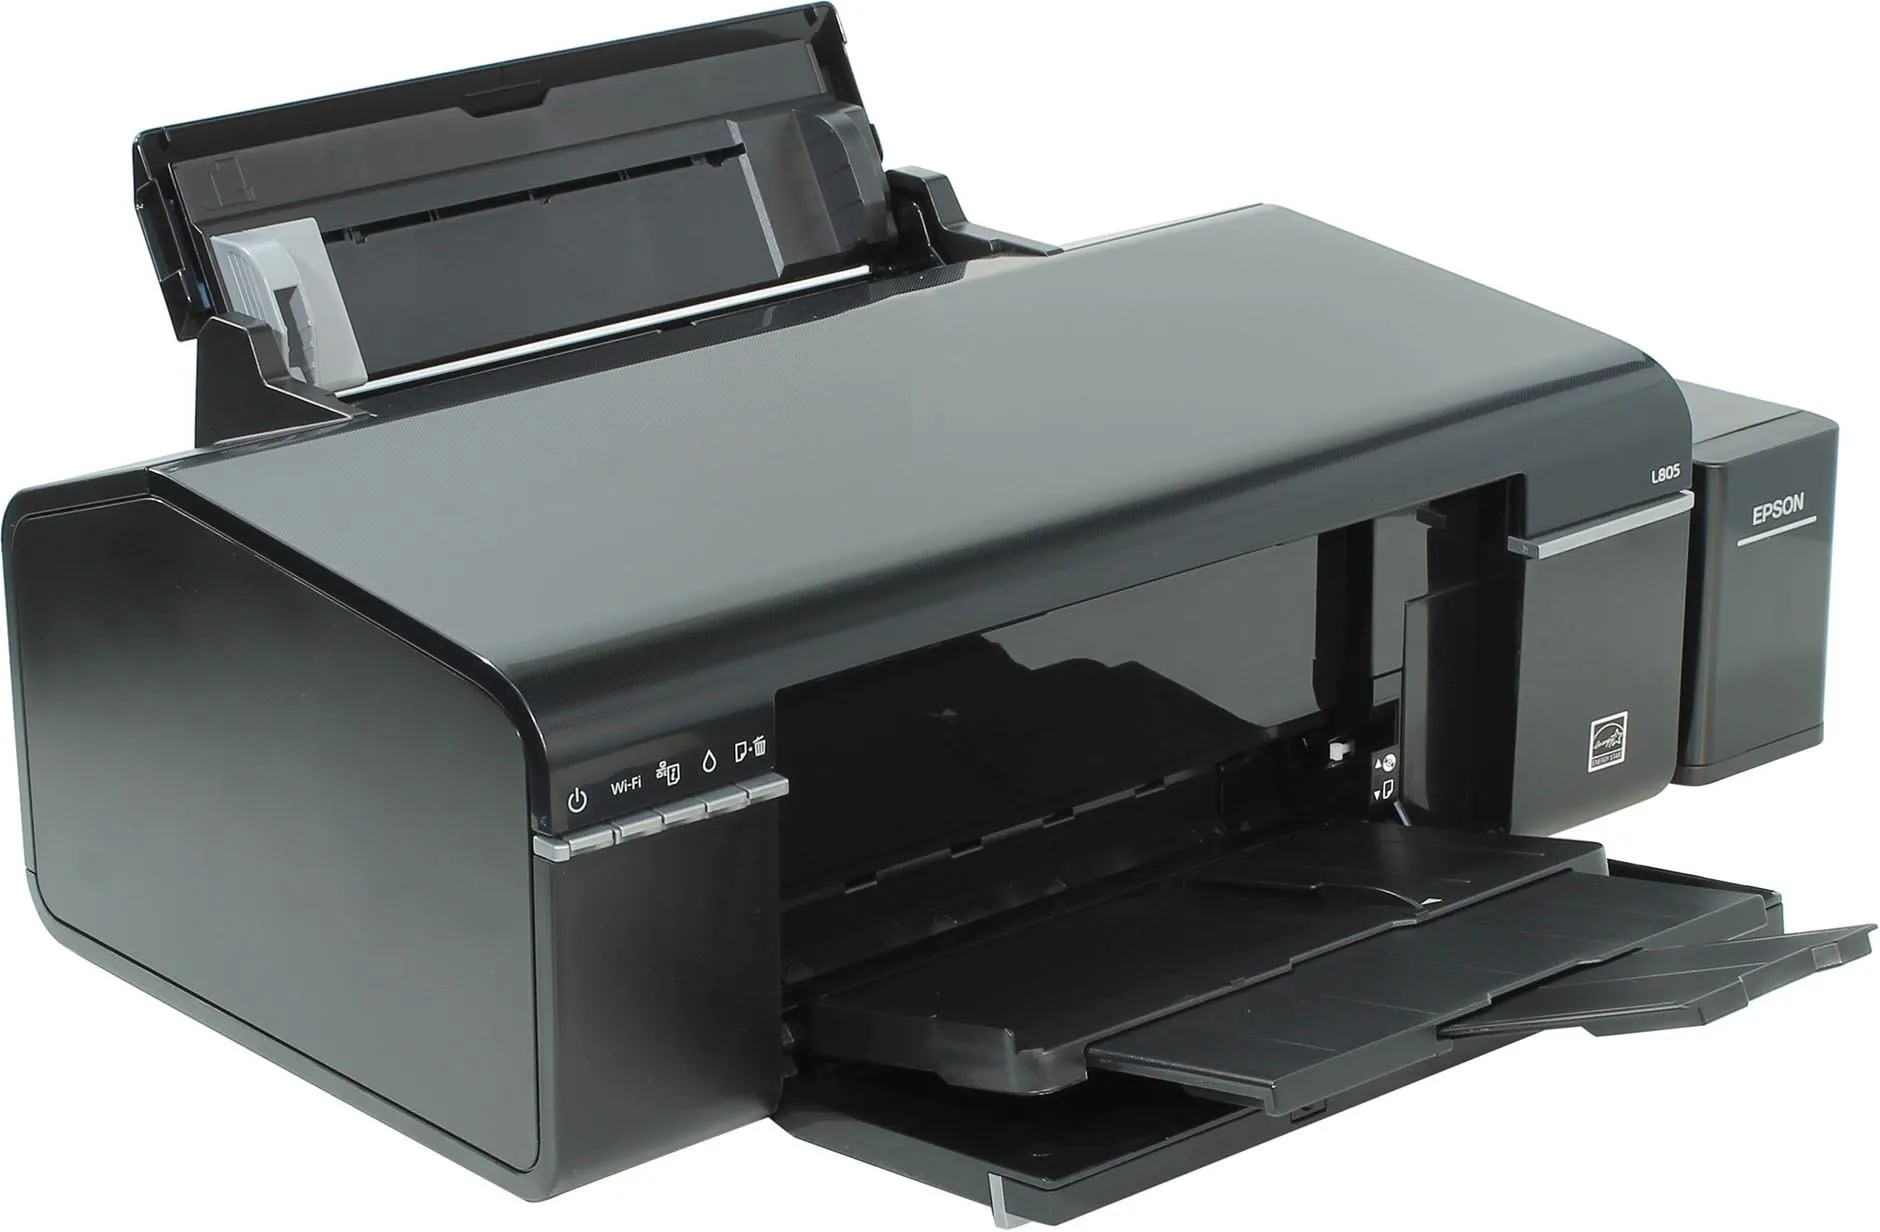 Принтер Epson L805 (A4, 37 стр / мин, 5760 optimized dpi, 6 красок, USB2.0, WiFi)#3